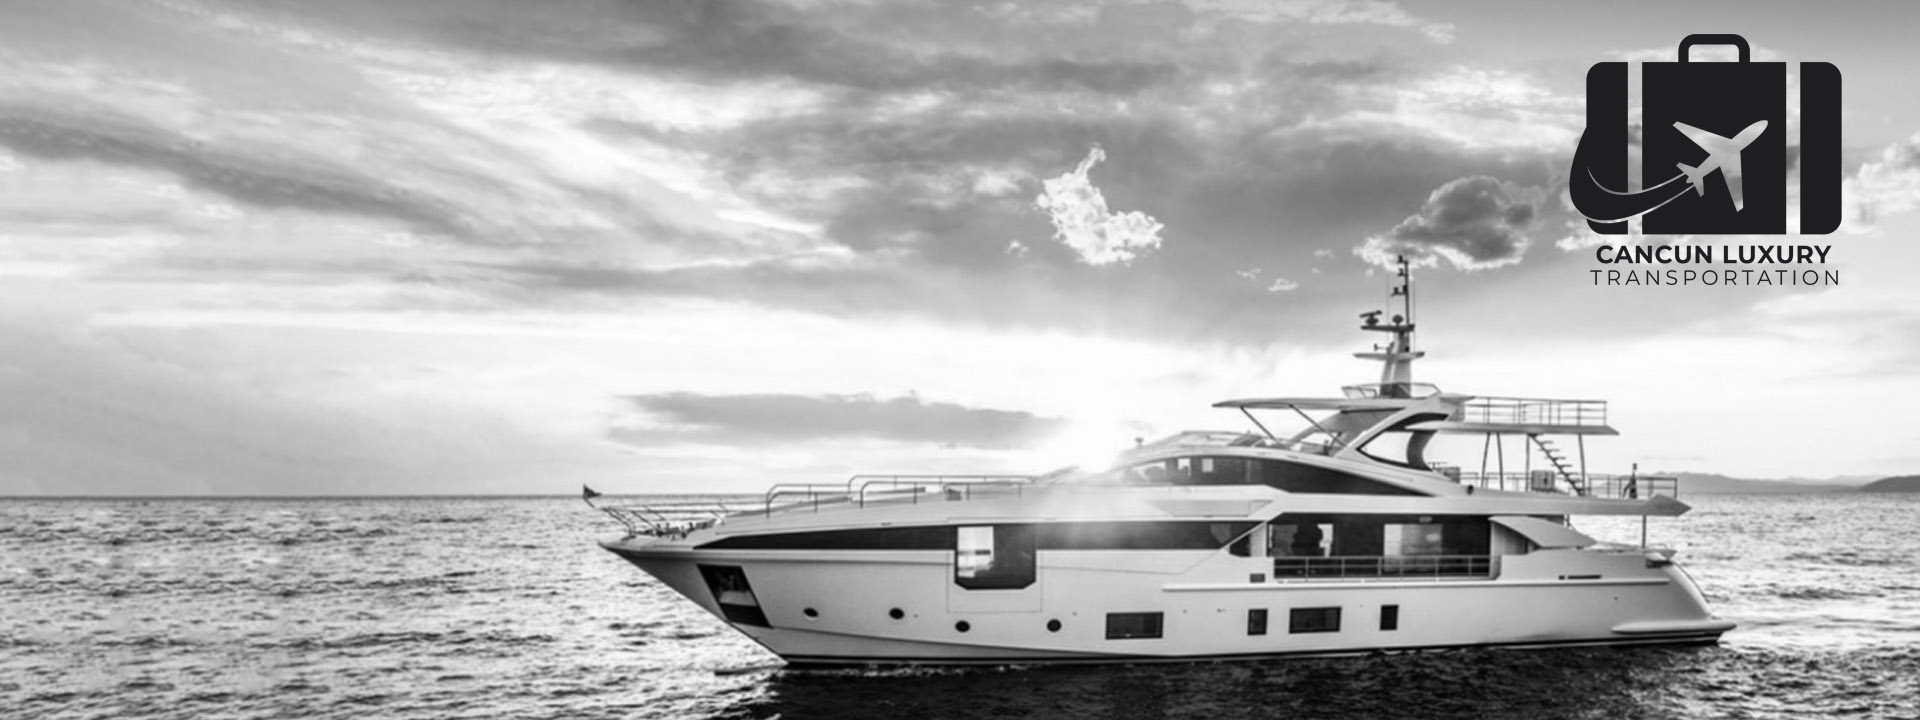 luxury cancun airpor transportation yachts